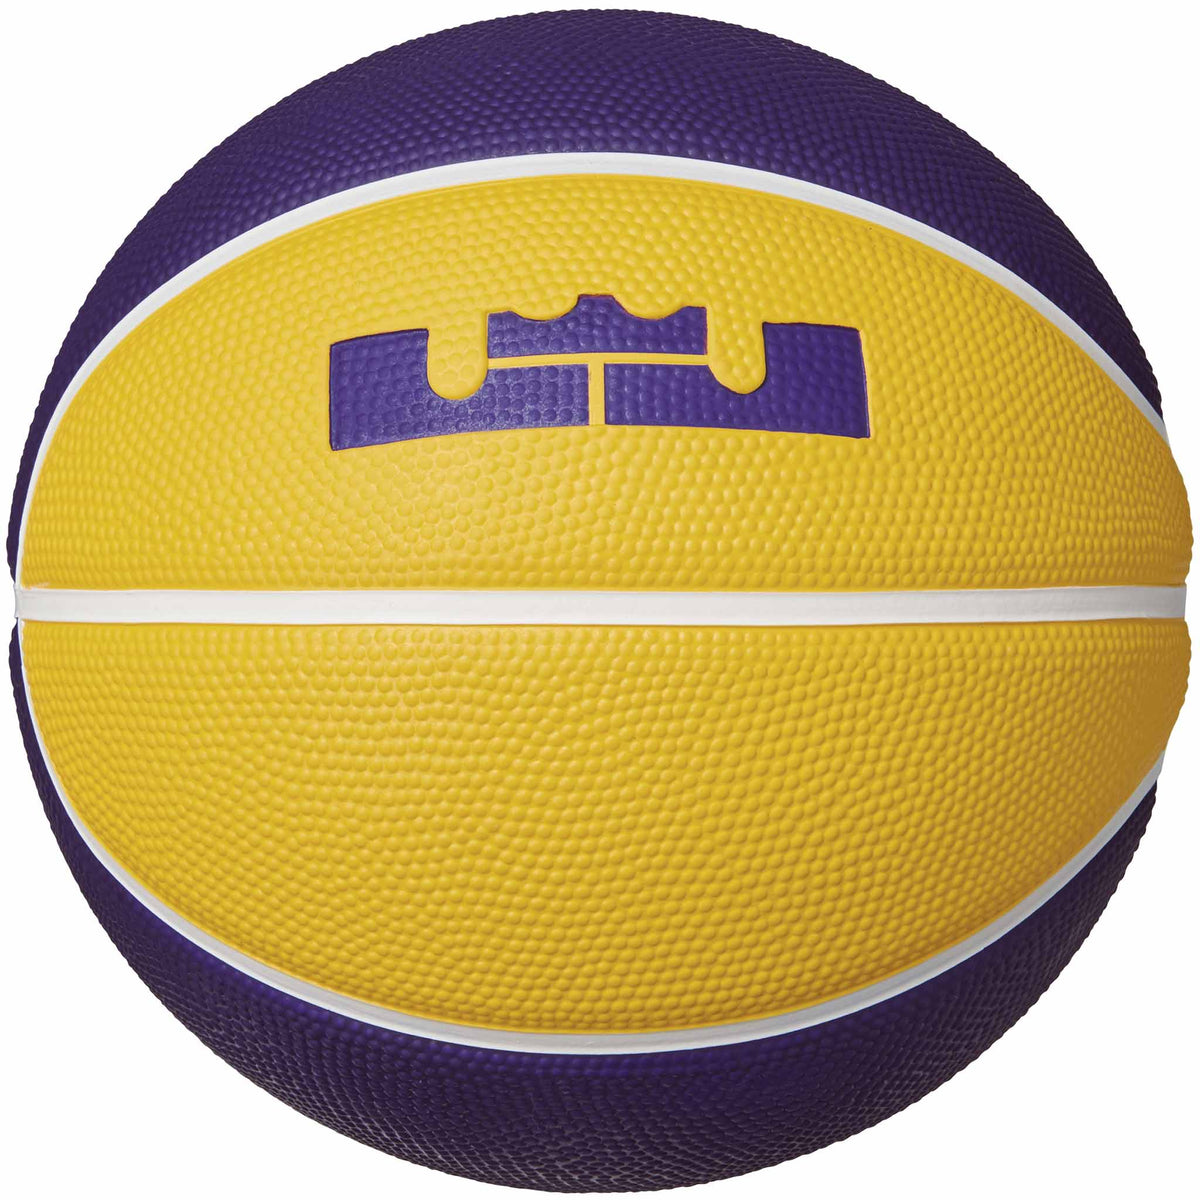 Nike Skills Lebron James ballon de basketball - Amarillo / White / White / Field Purple